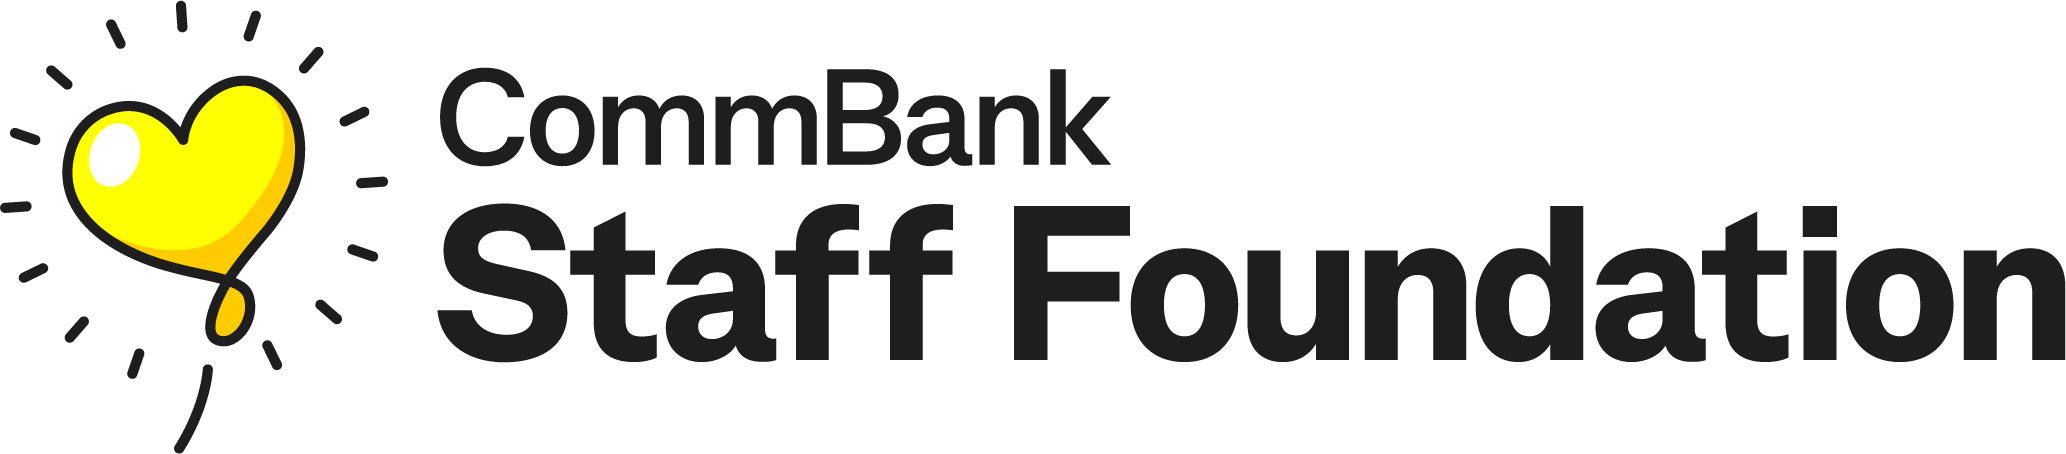 Commbank Staff Foundation Logo